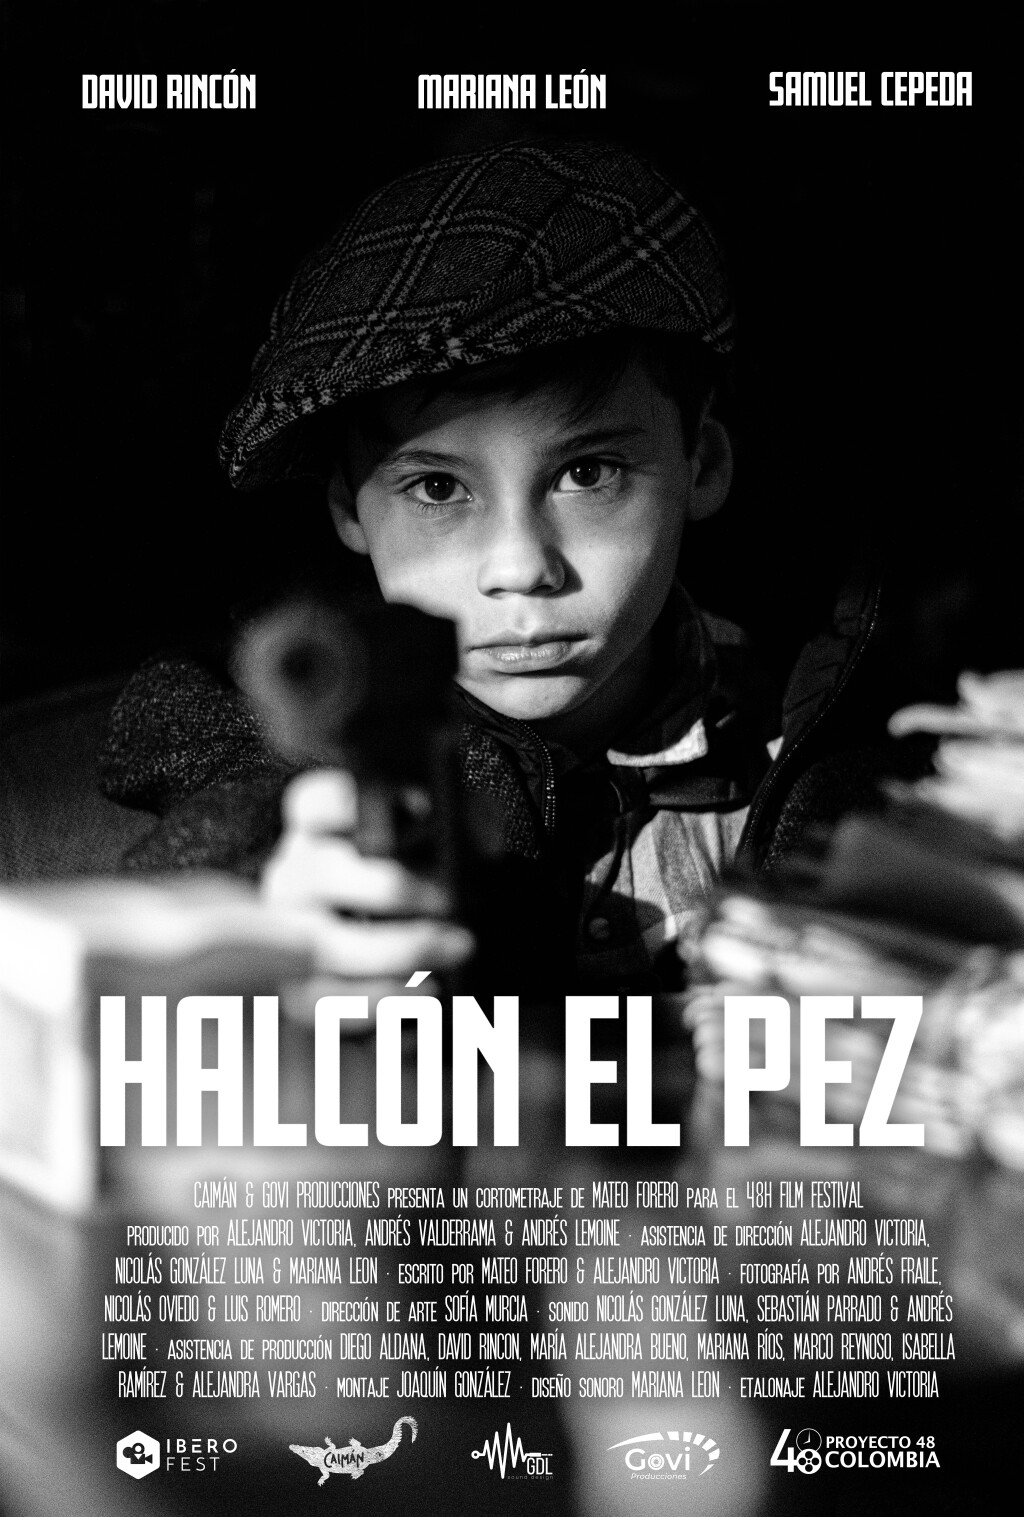 Filmposter for Halcón el pez